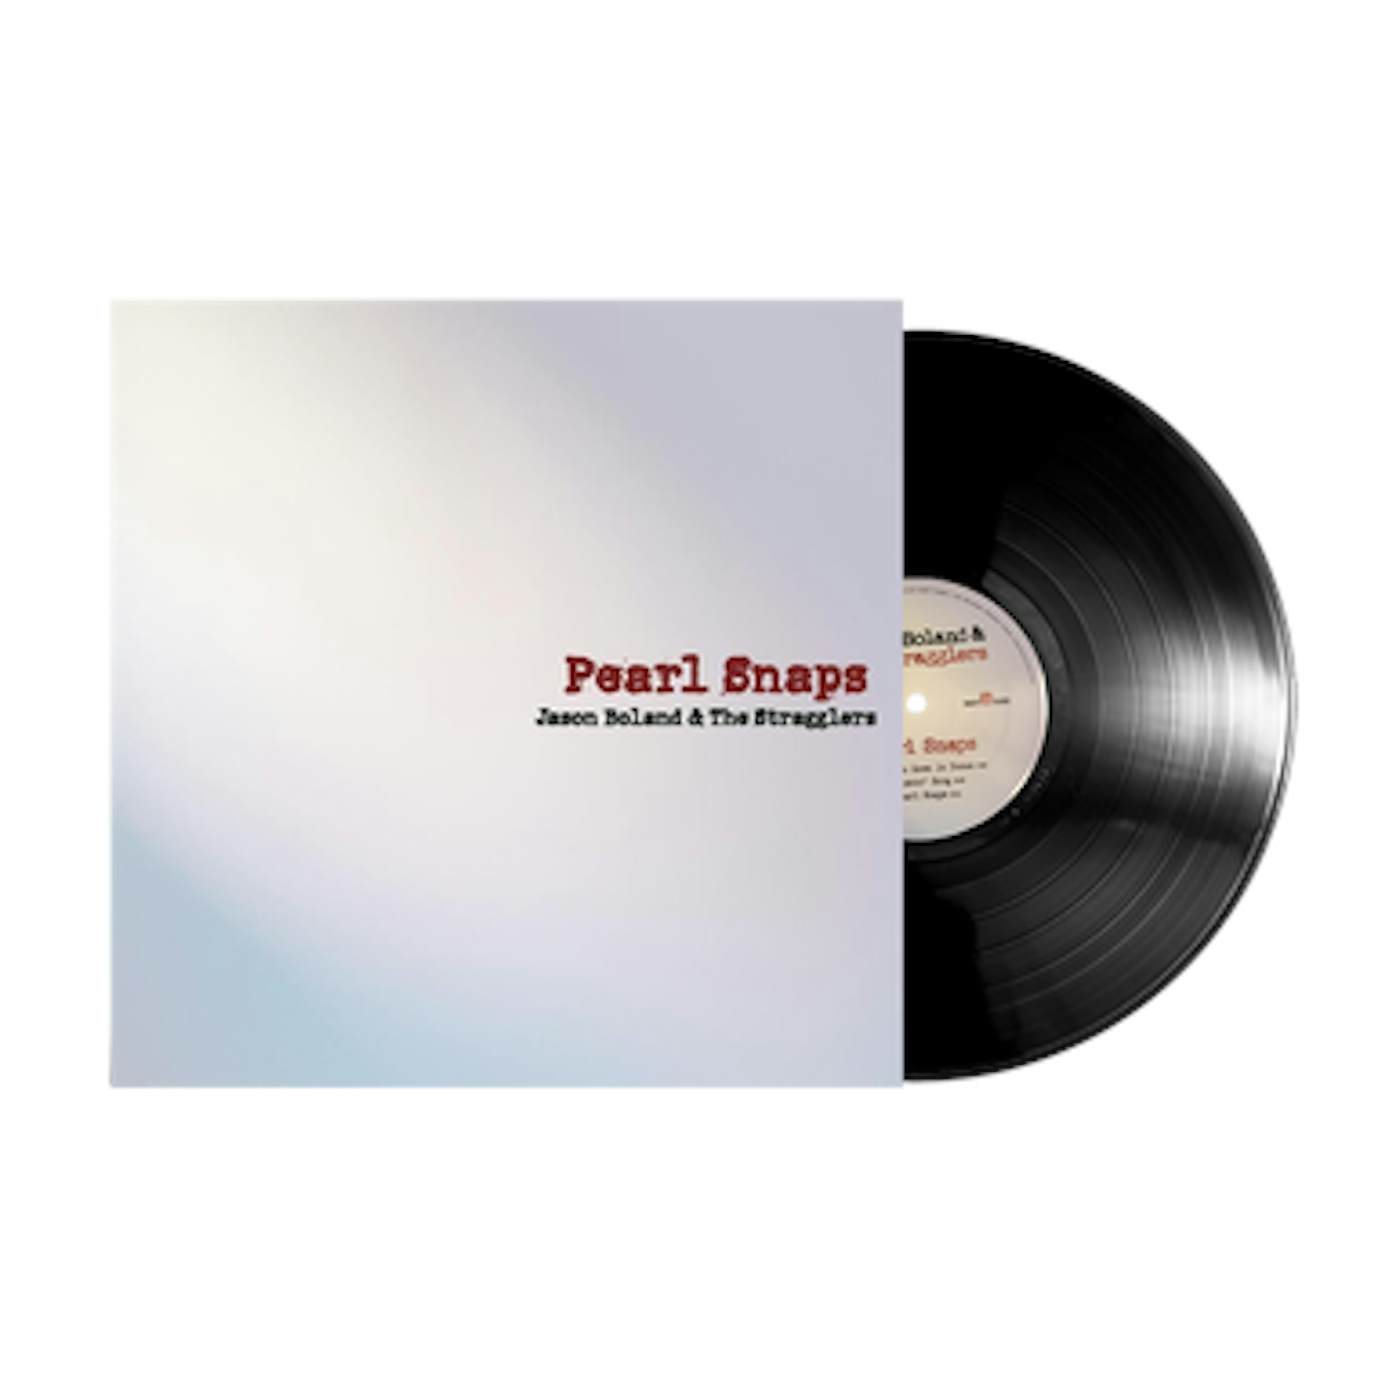 Jason Boland & The Stragglers Pearl Snaps - 20th Anniversary Bundle